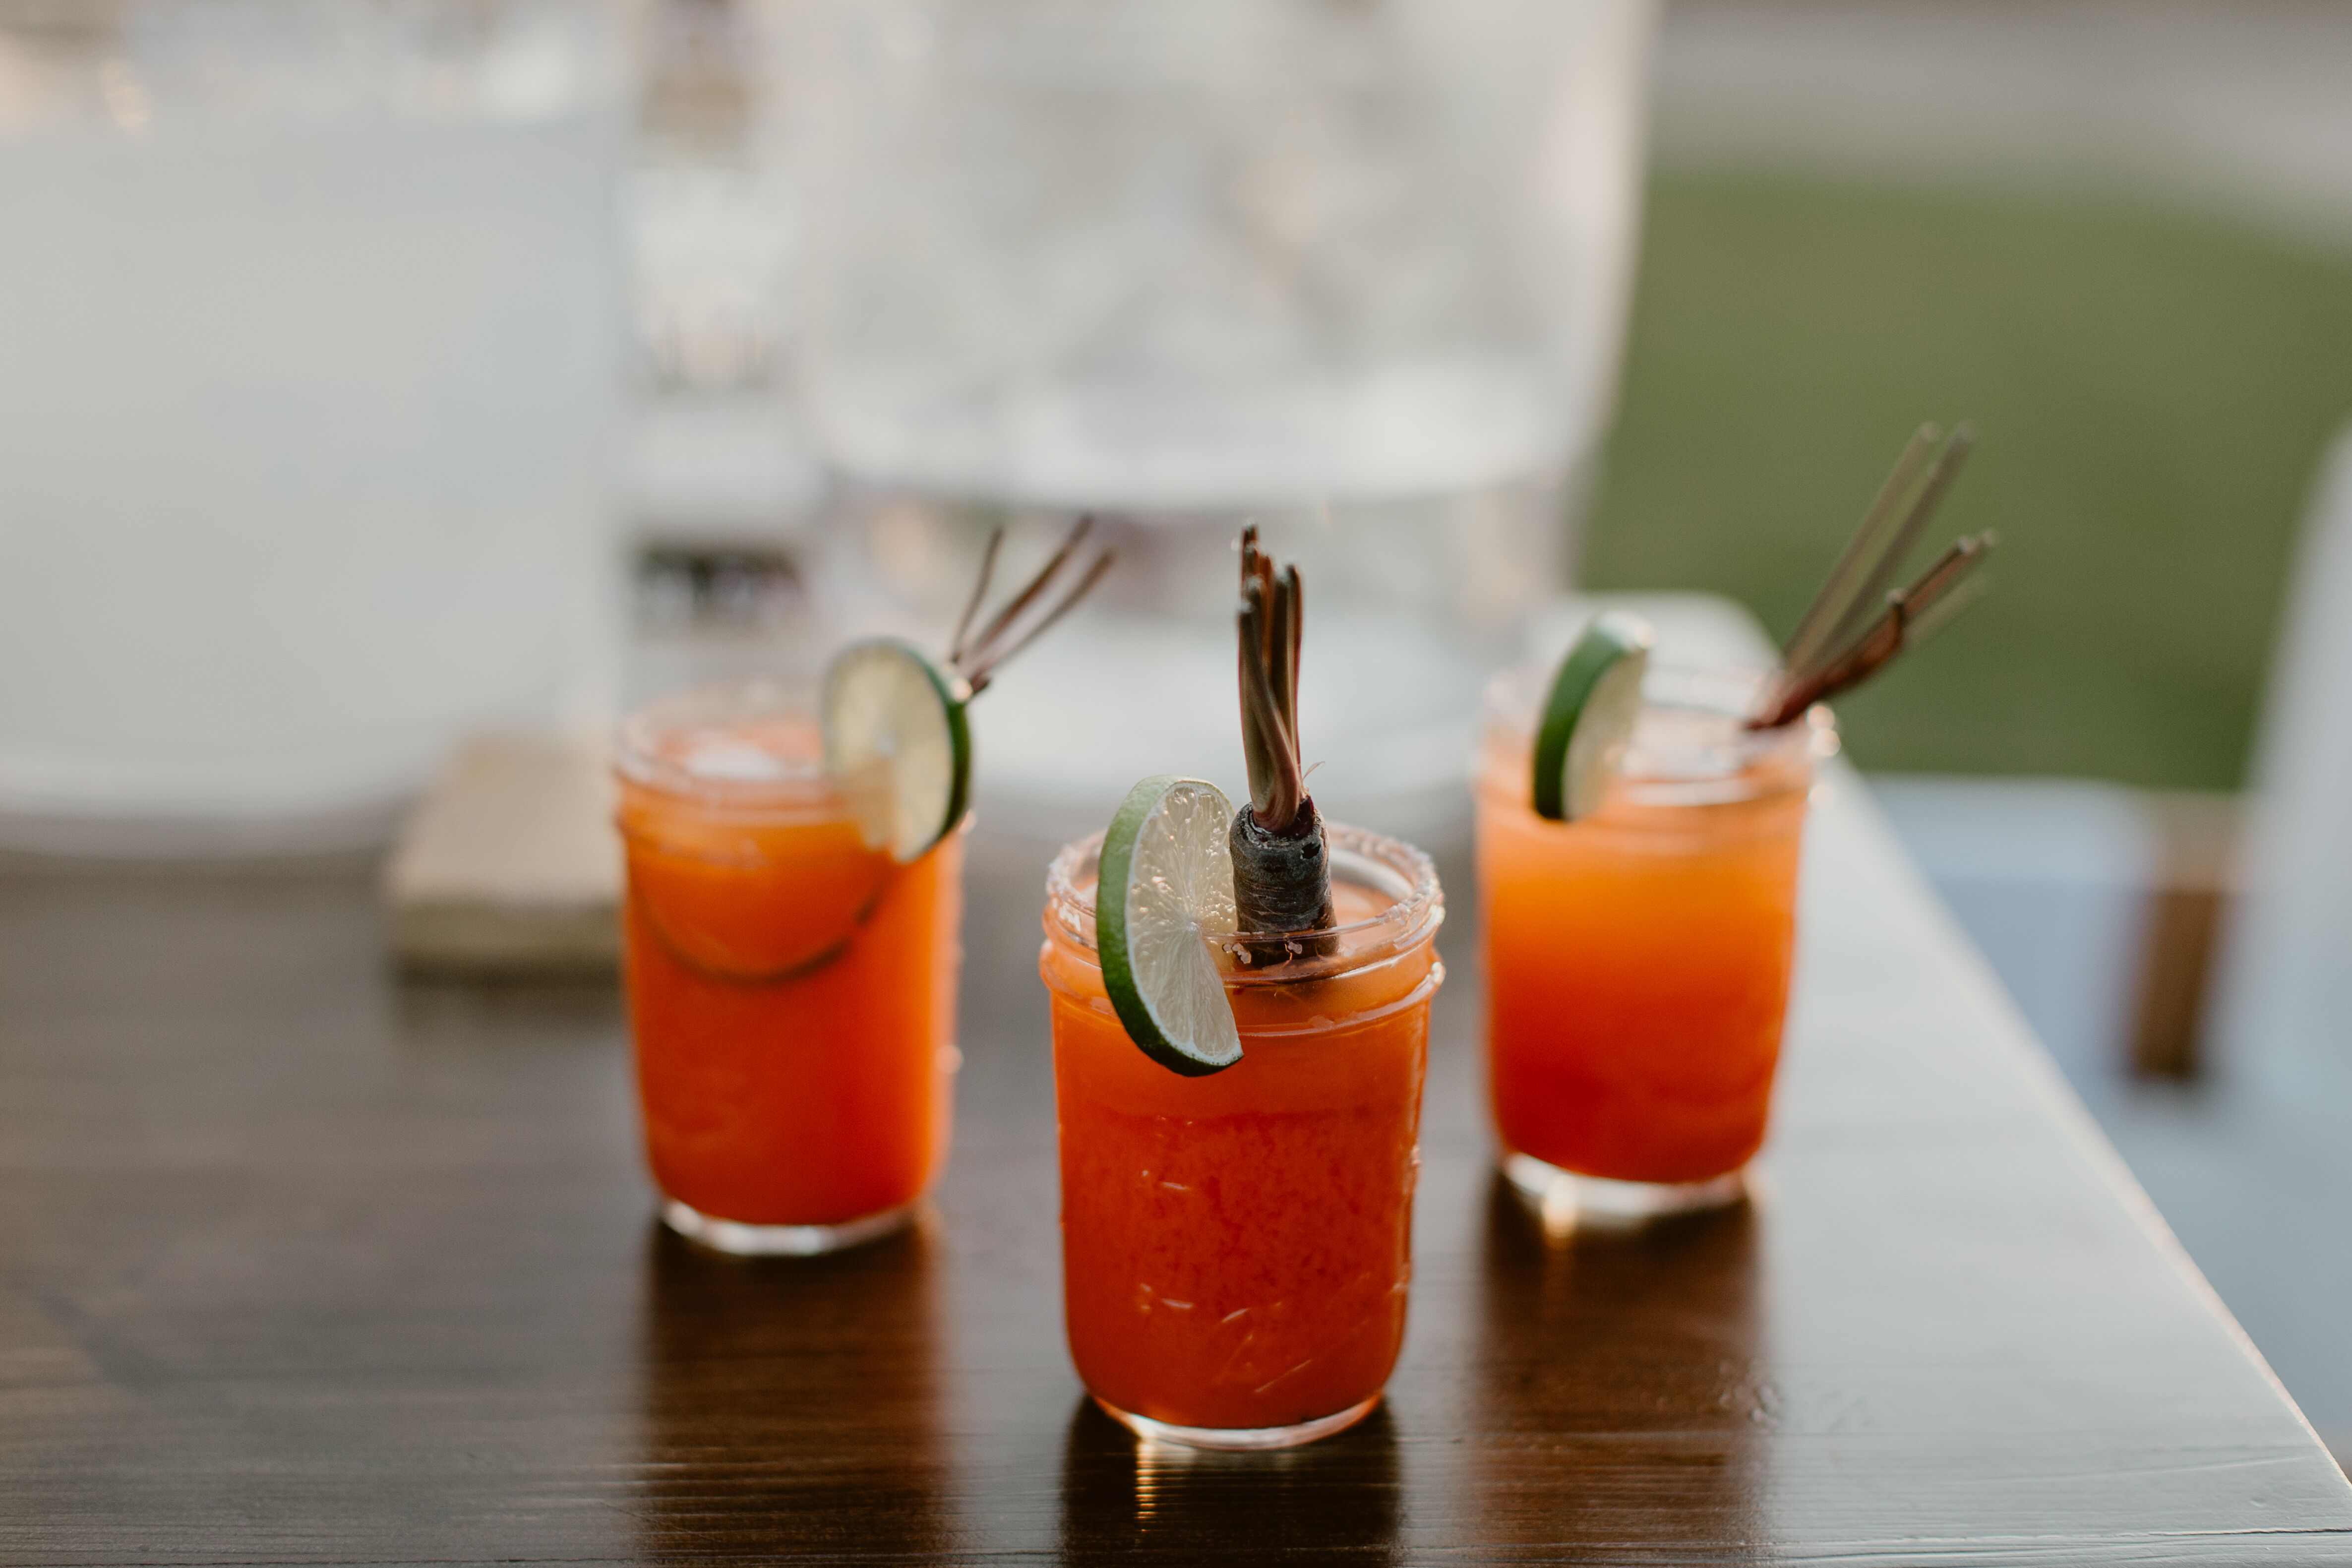 Signiature Cocktail in Mason Jar